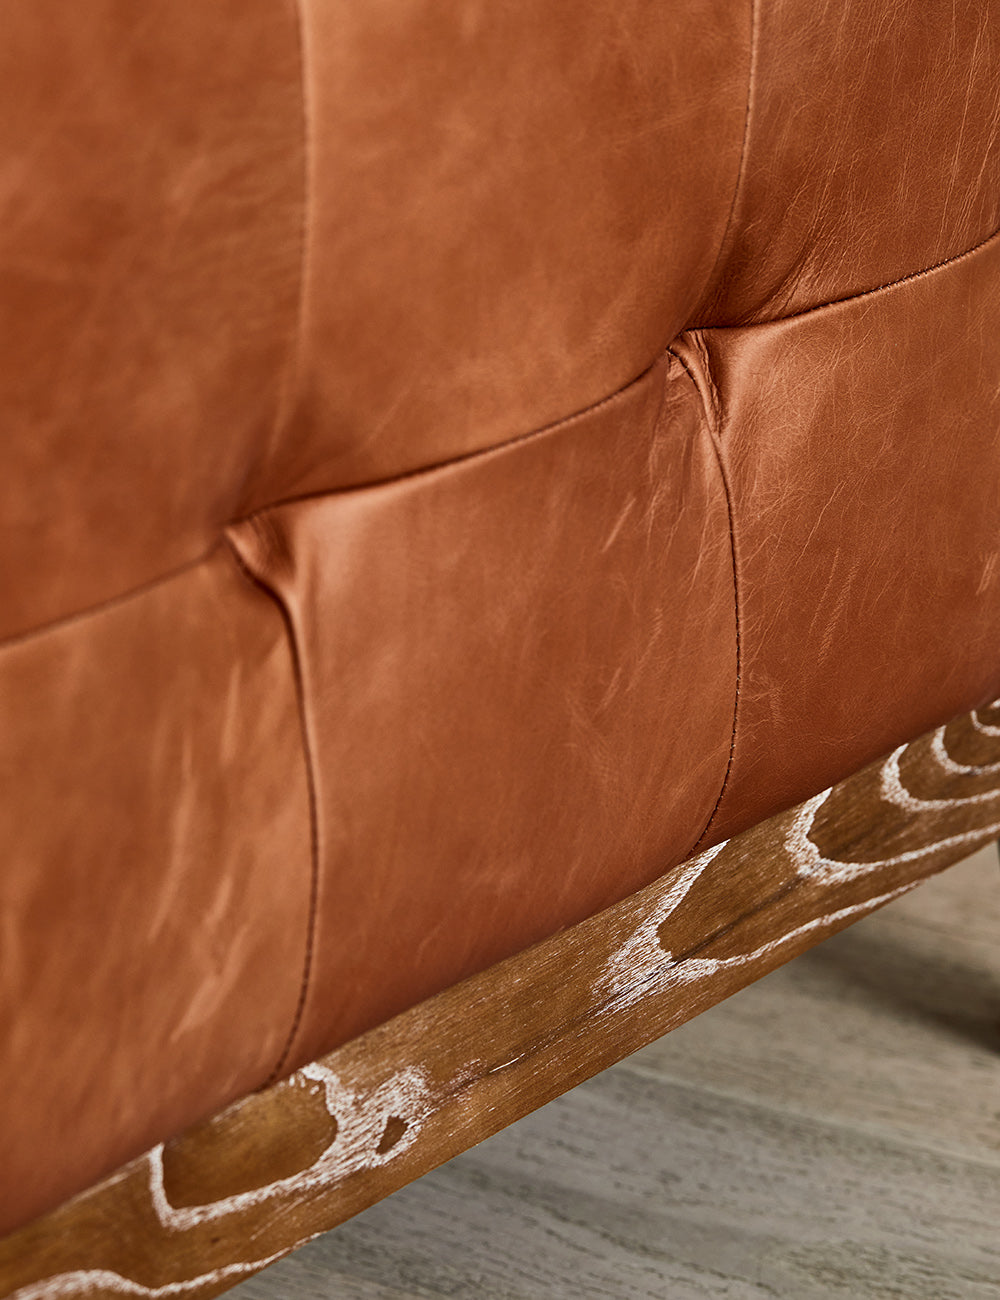 Alabama Brown Leather Three Seater Sofa